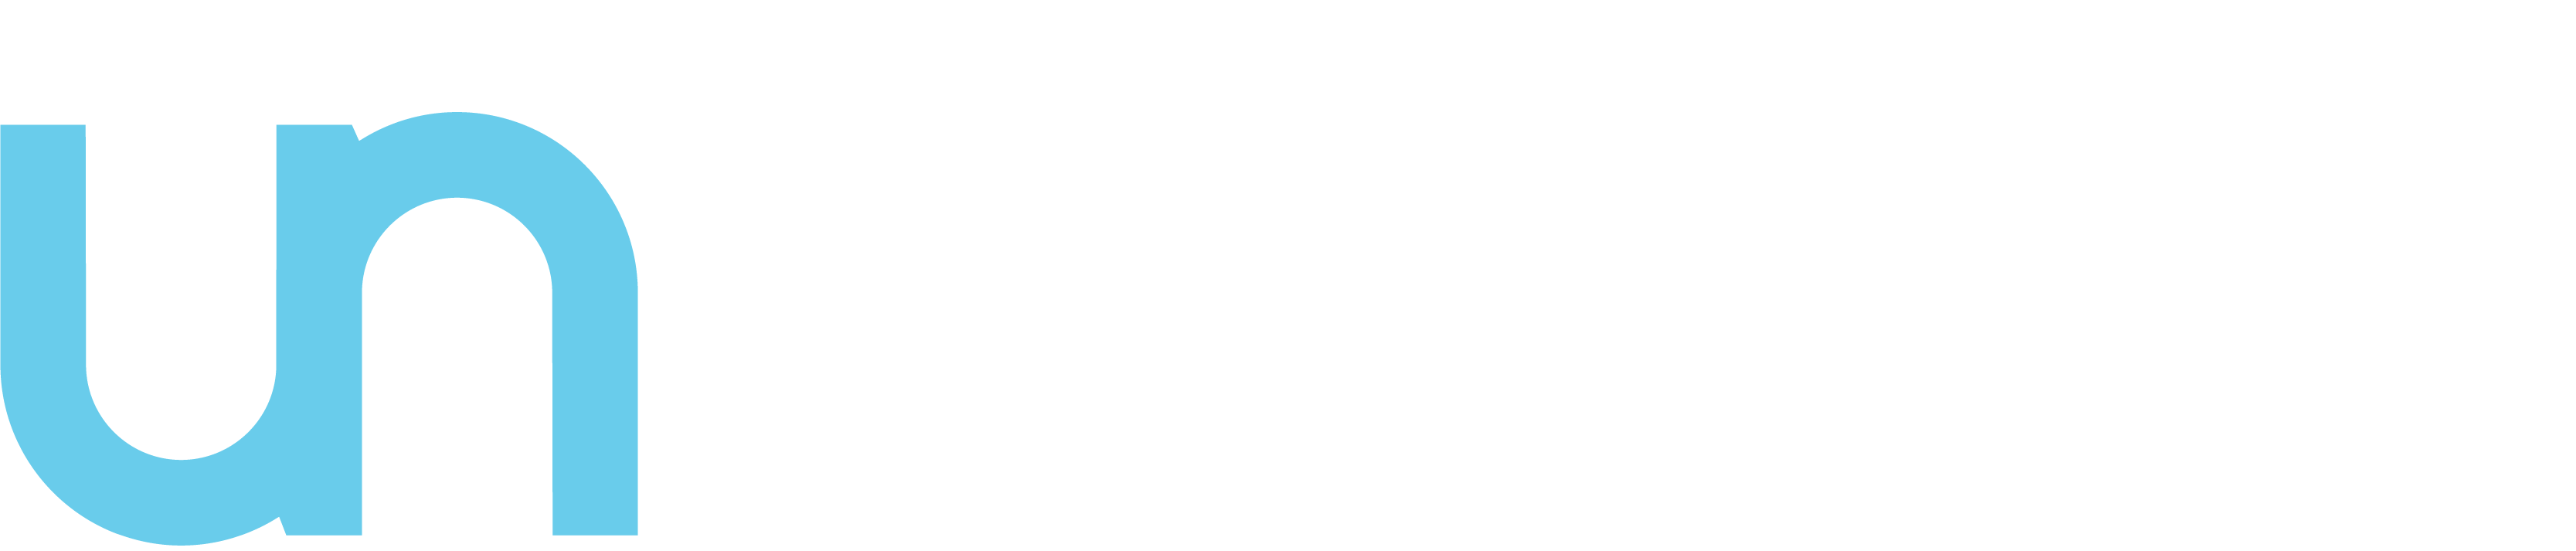 Corporate logotype